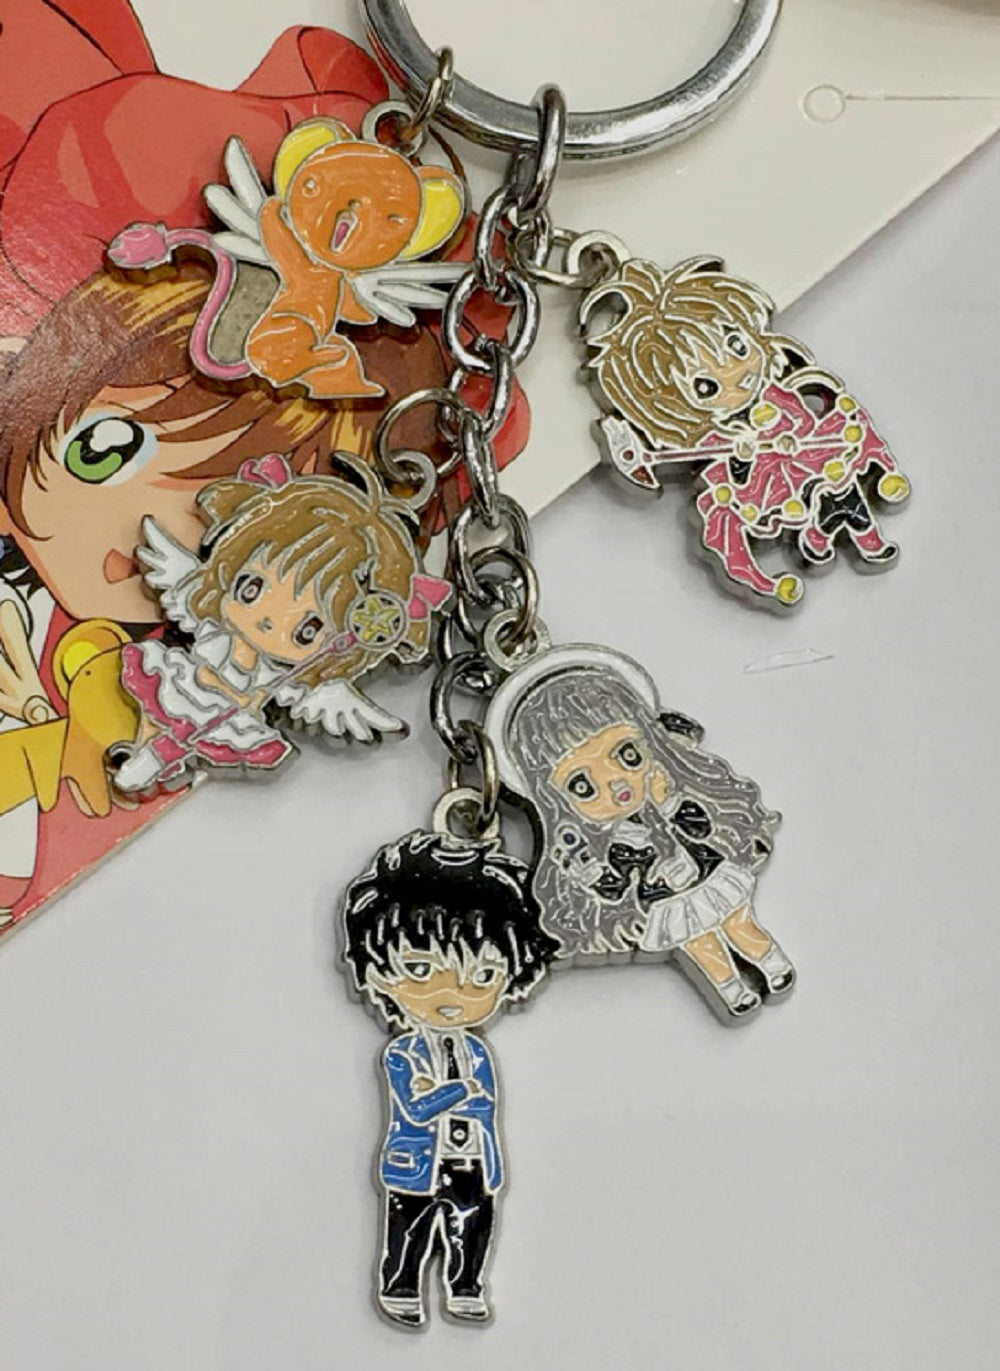 Card Captor Sakura Characters Keychain - Super Anime Store FREE SHIPPING FAST SHIPPING USA